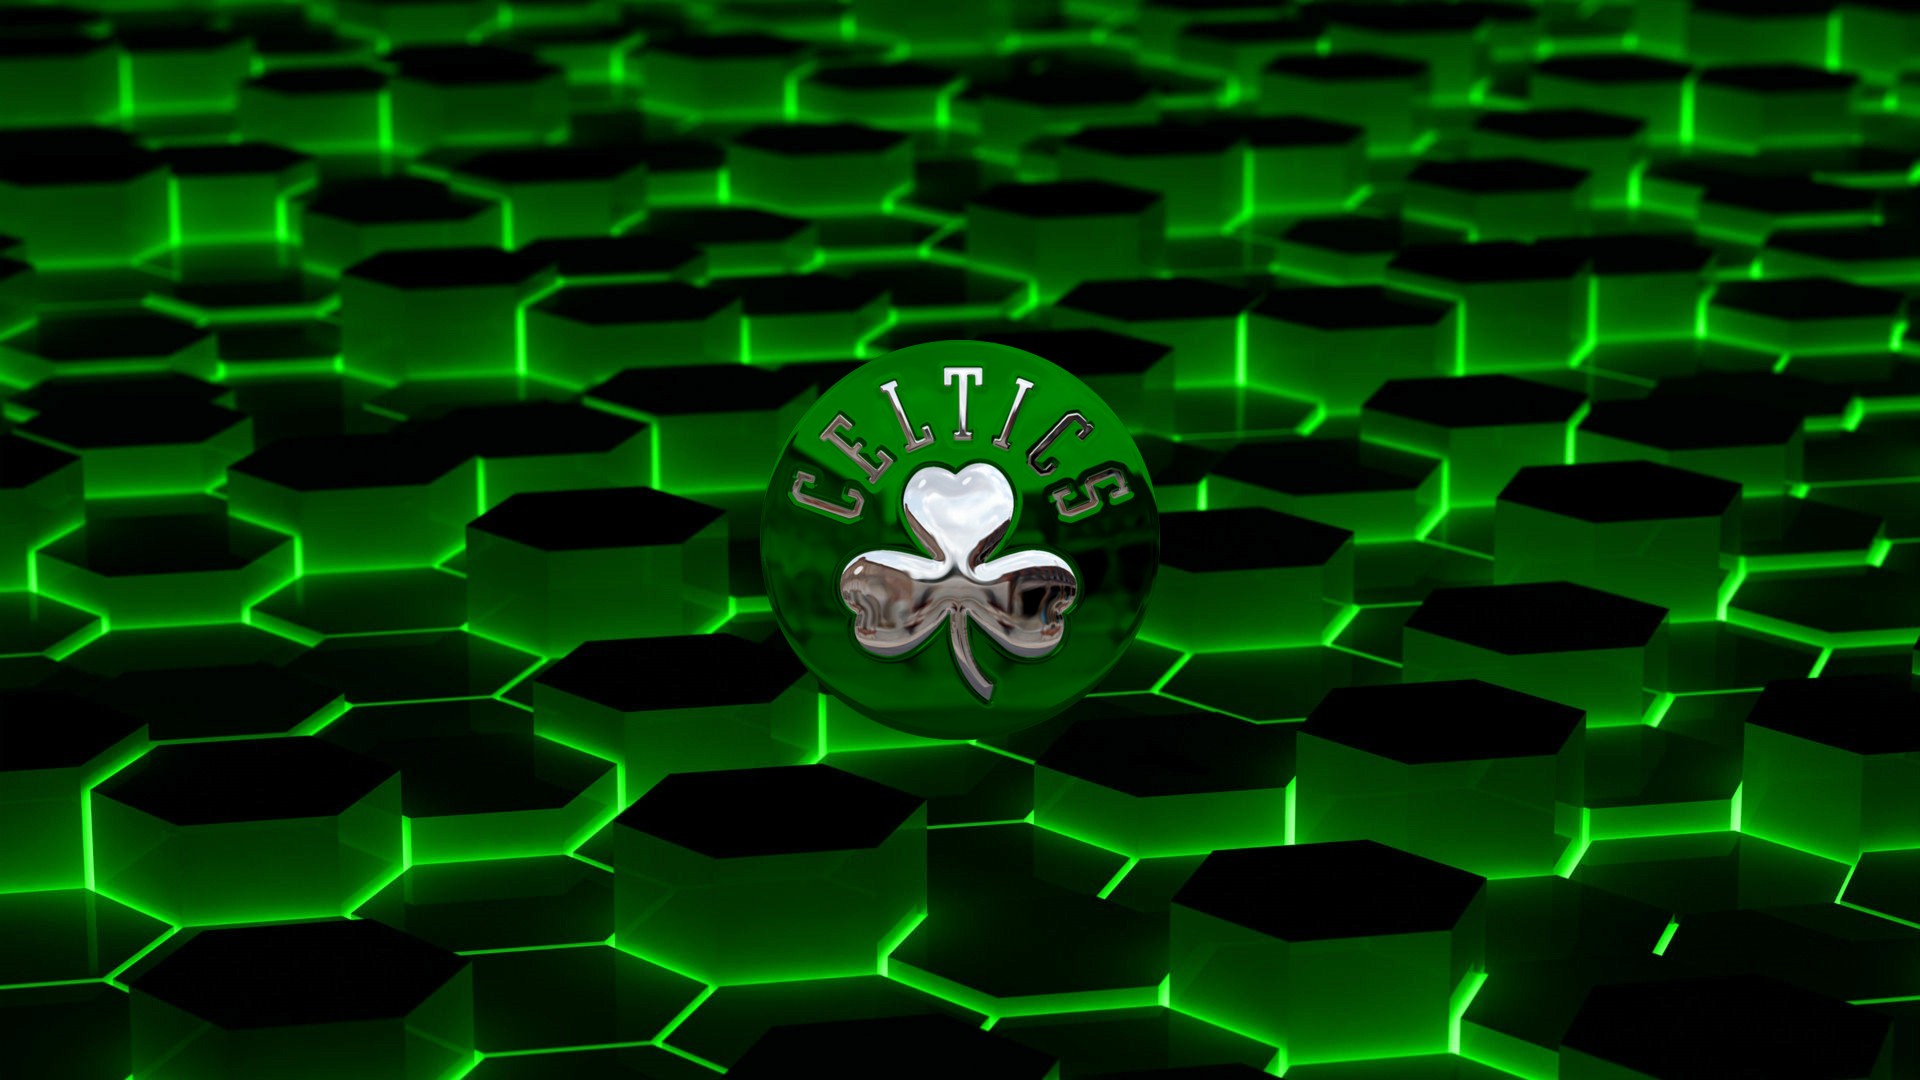 Boston Celtics: Logo Pattern Wallpaper